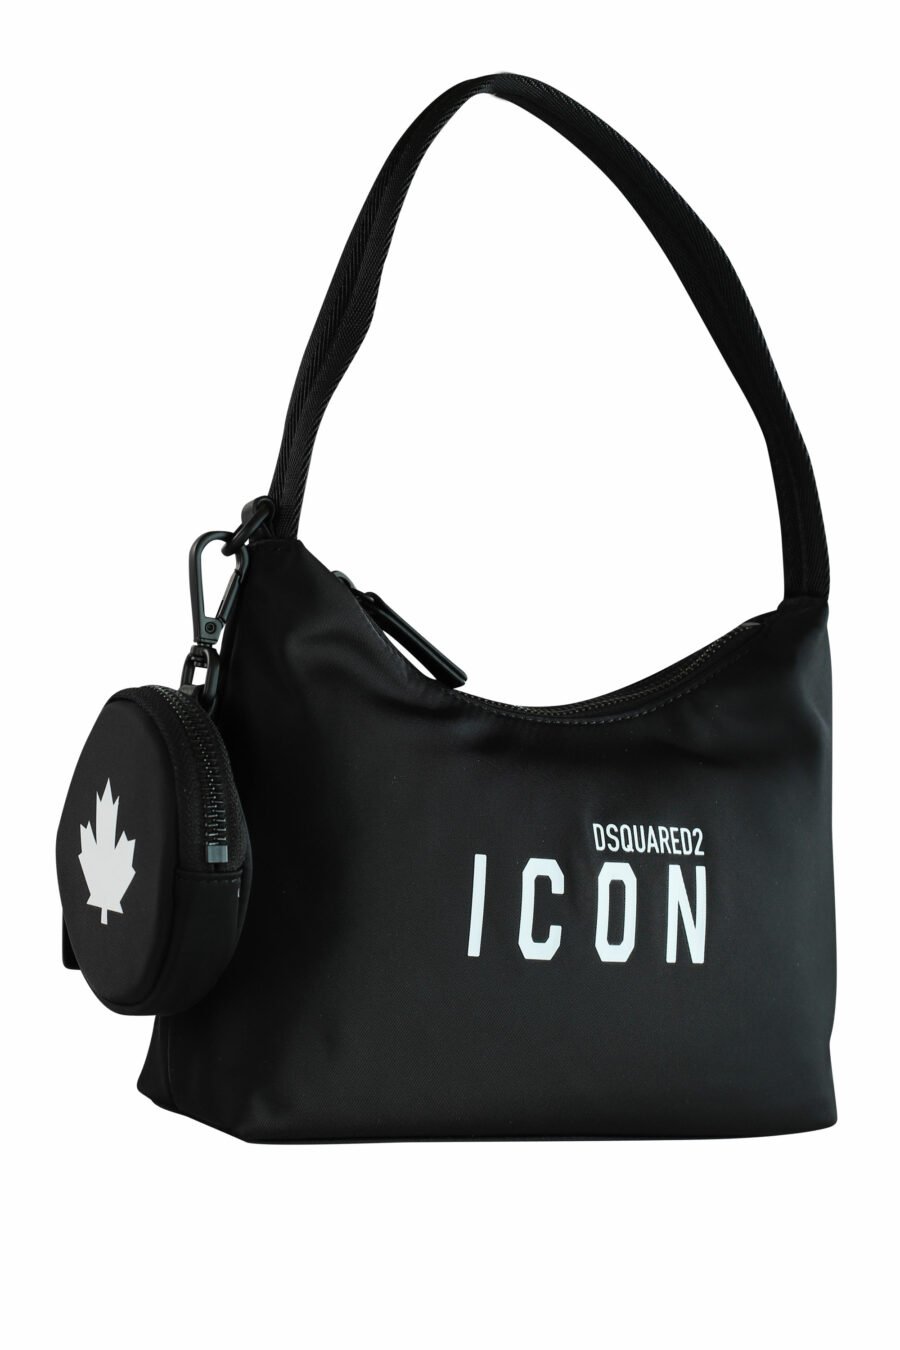 Black hobo style shoulder bag with "icon" logo - IMG 1245